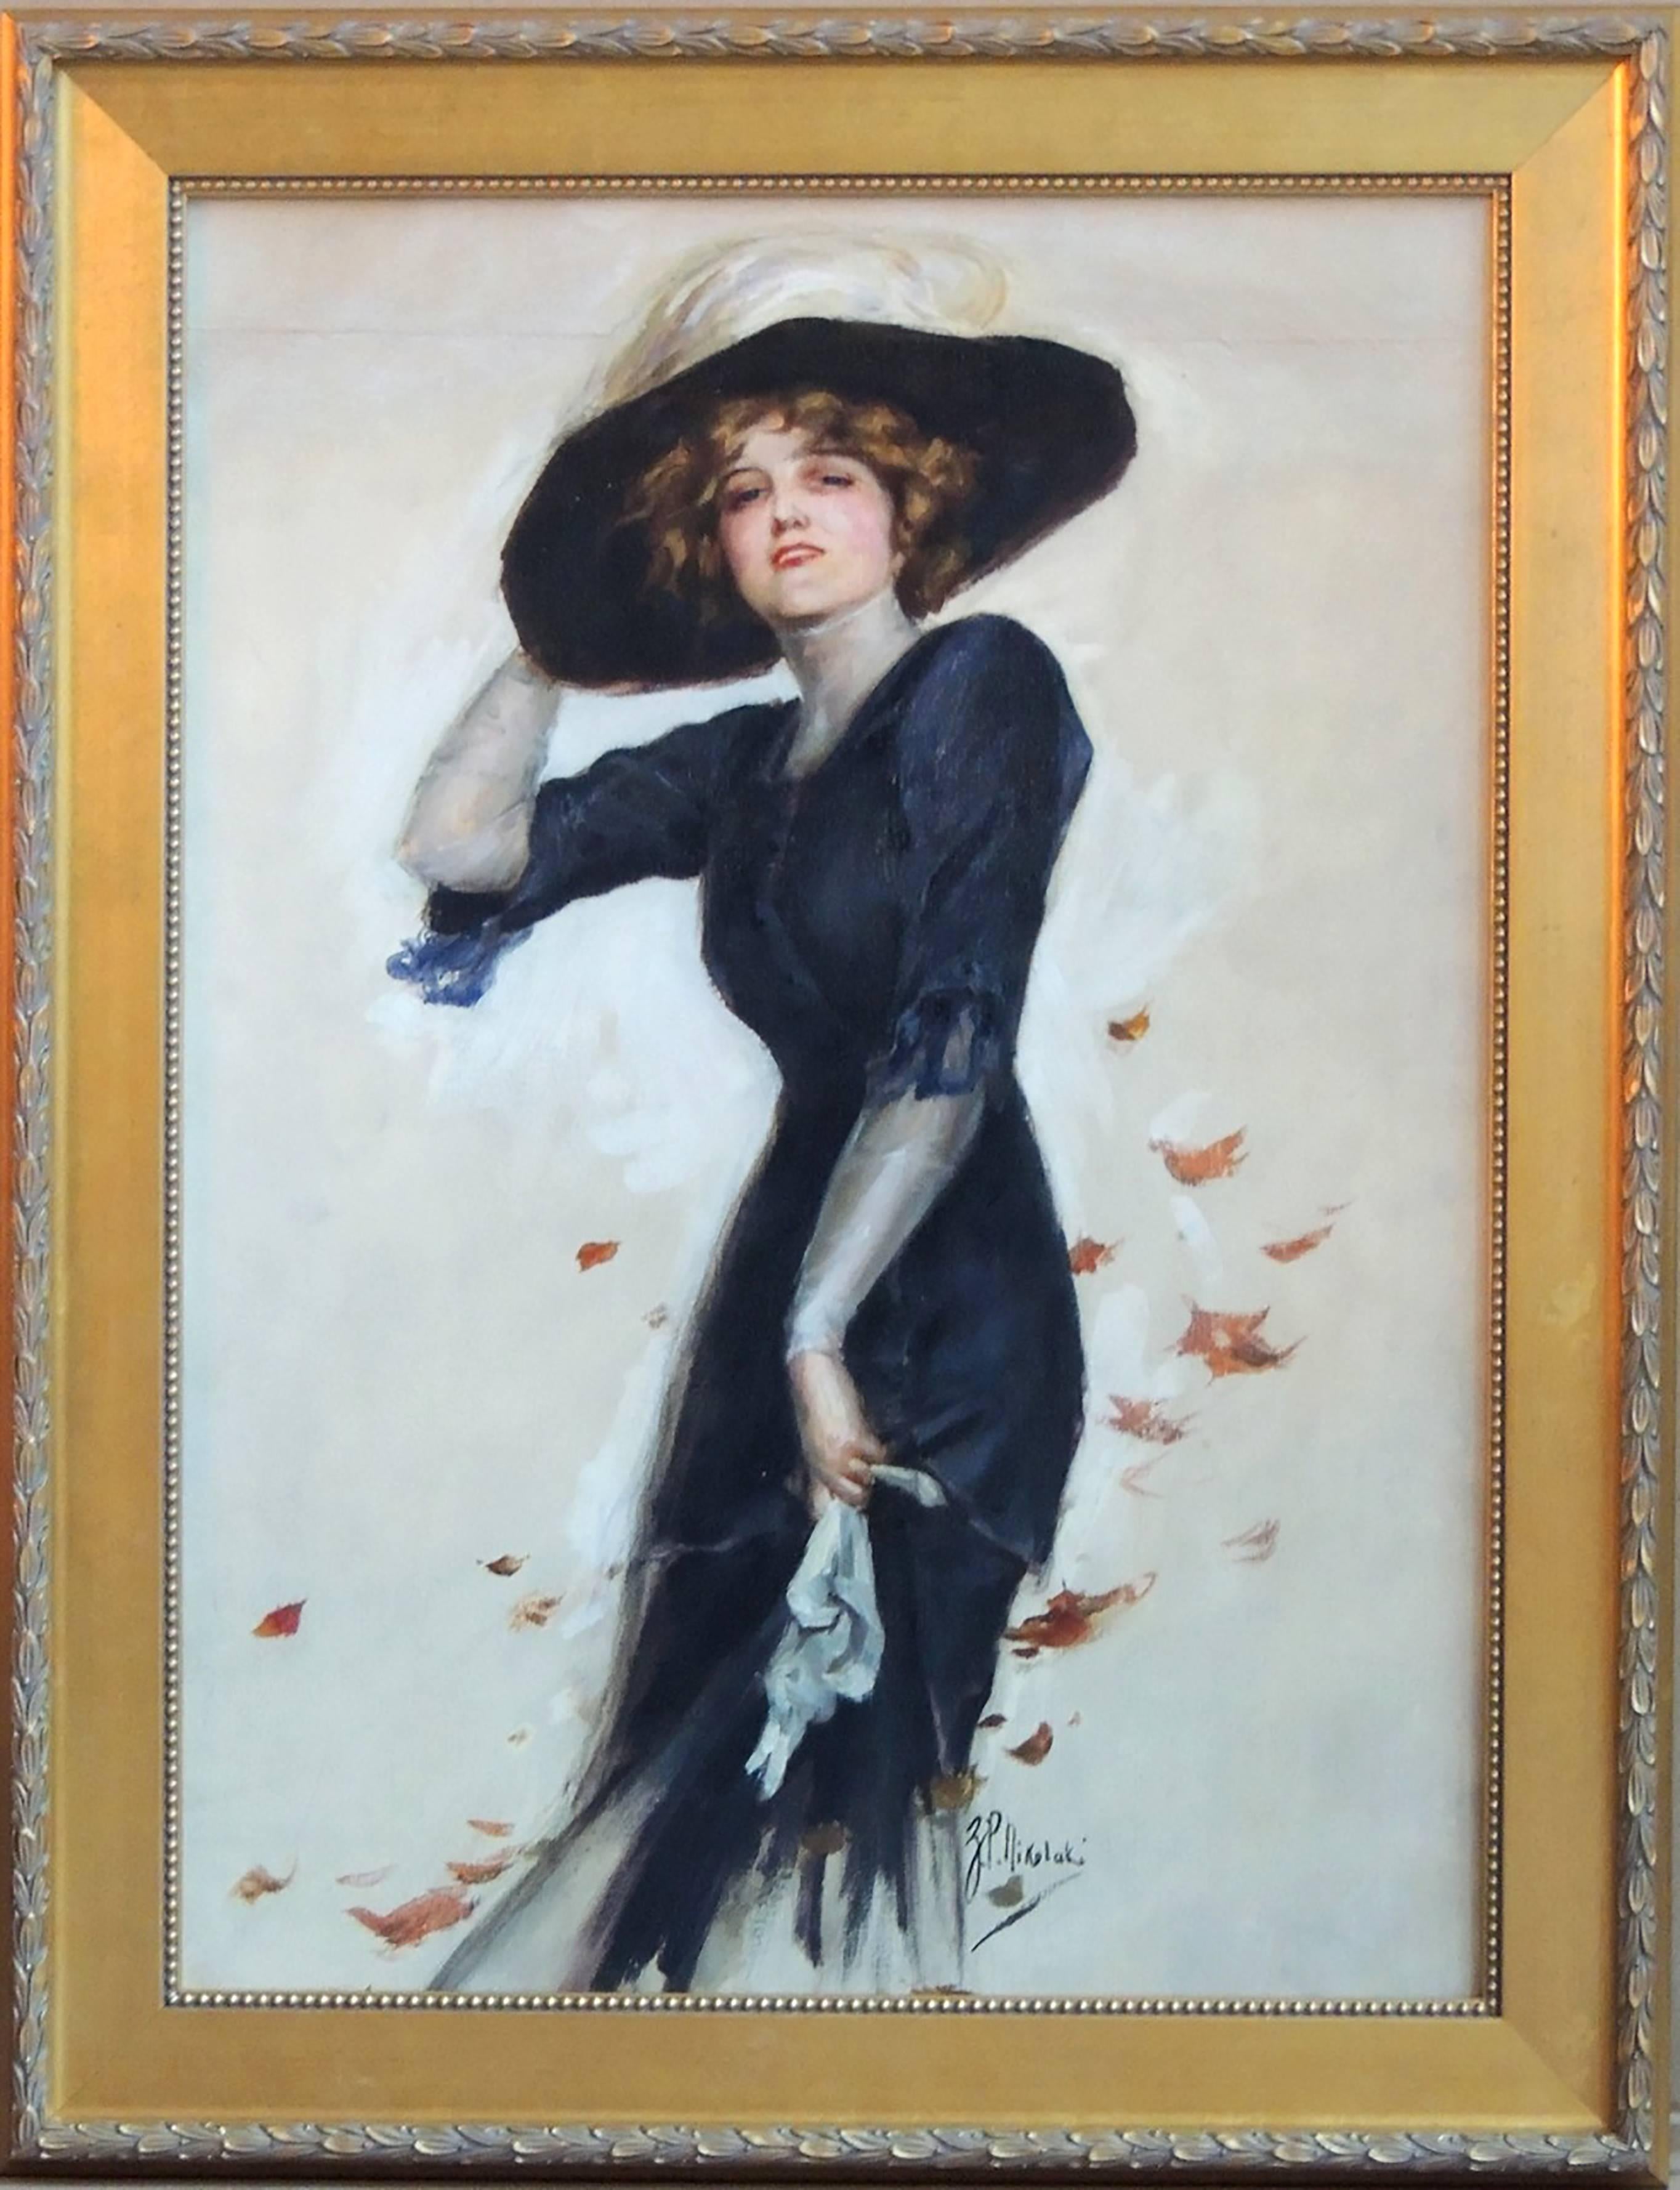 Woman mit Blättern – Painting von Nikolaki Z.P.